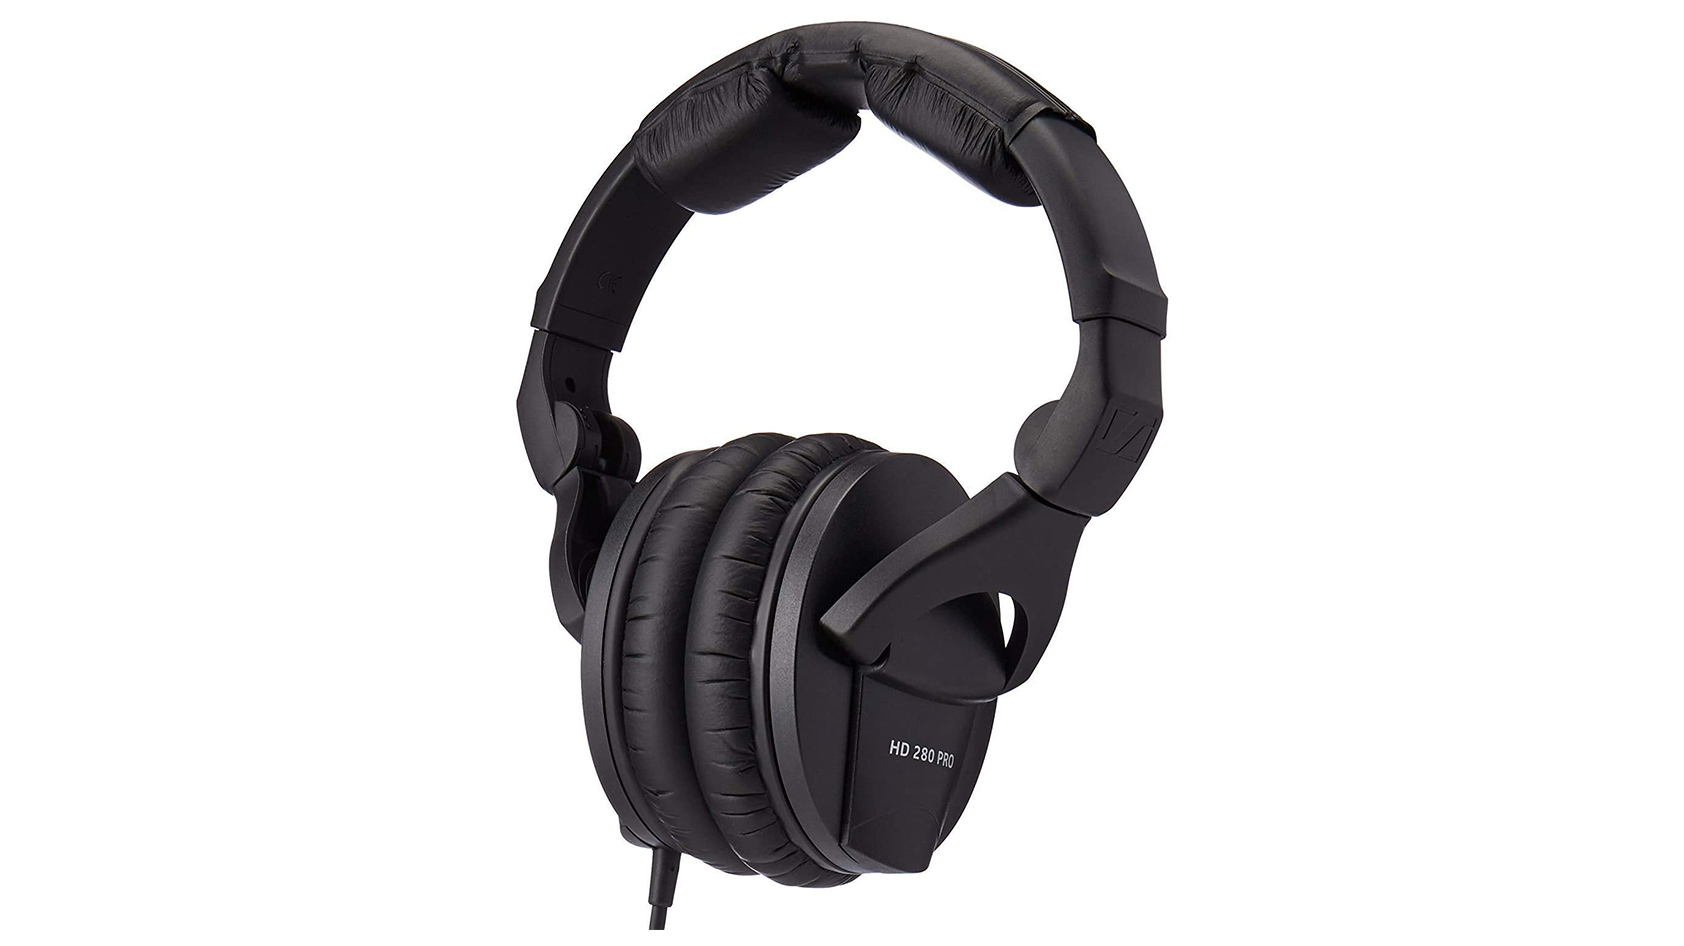 The Sennheiser HD 280 Pro studio headphones in black against a white background.